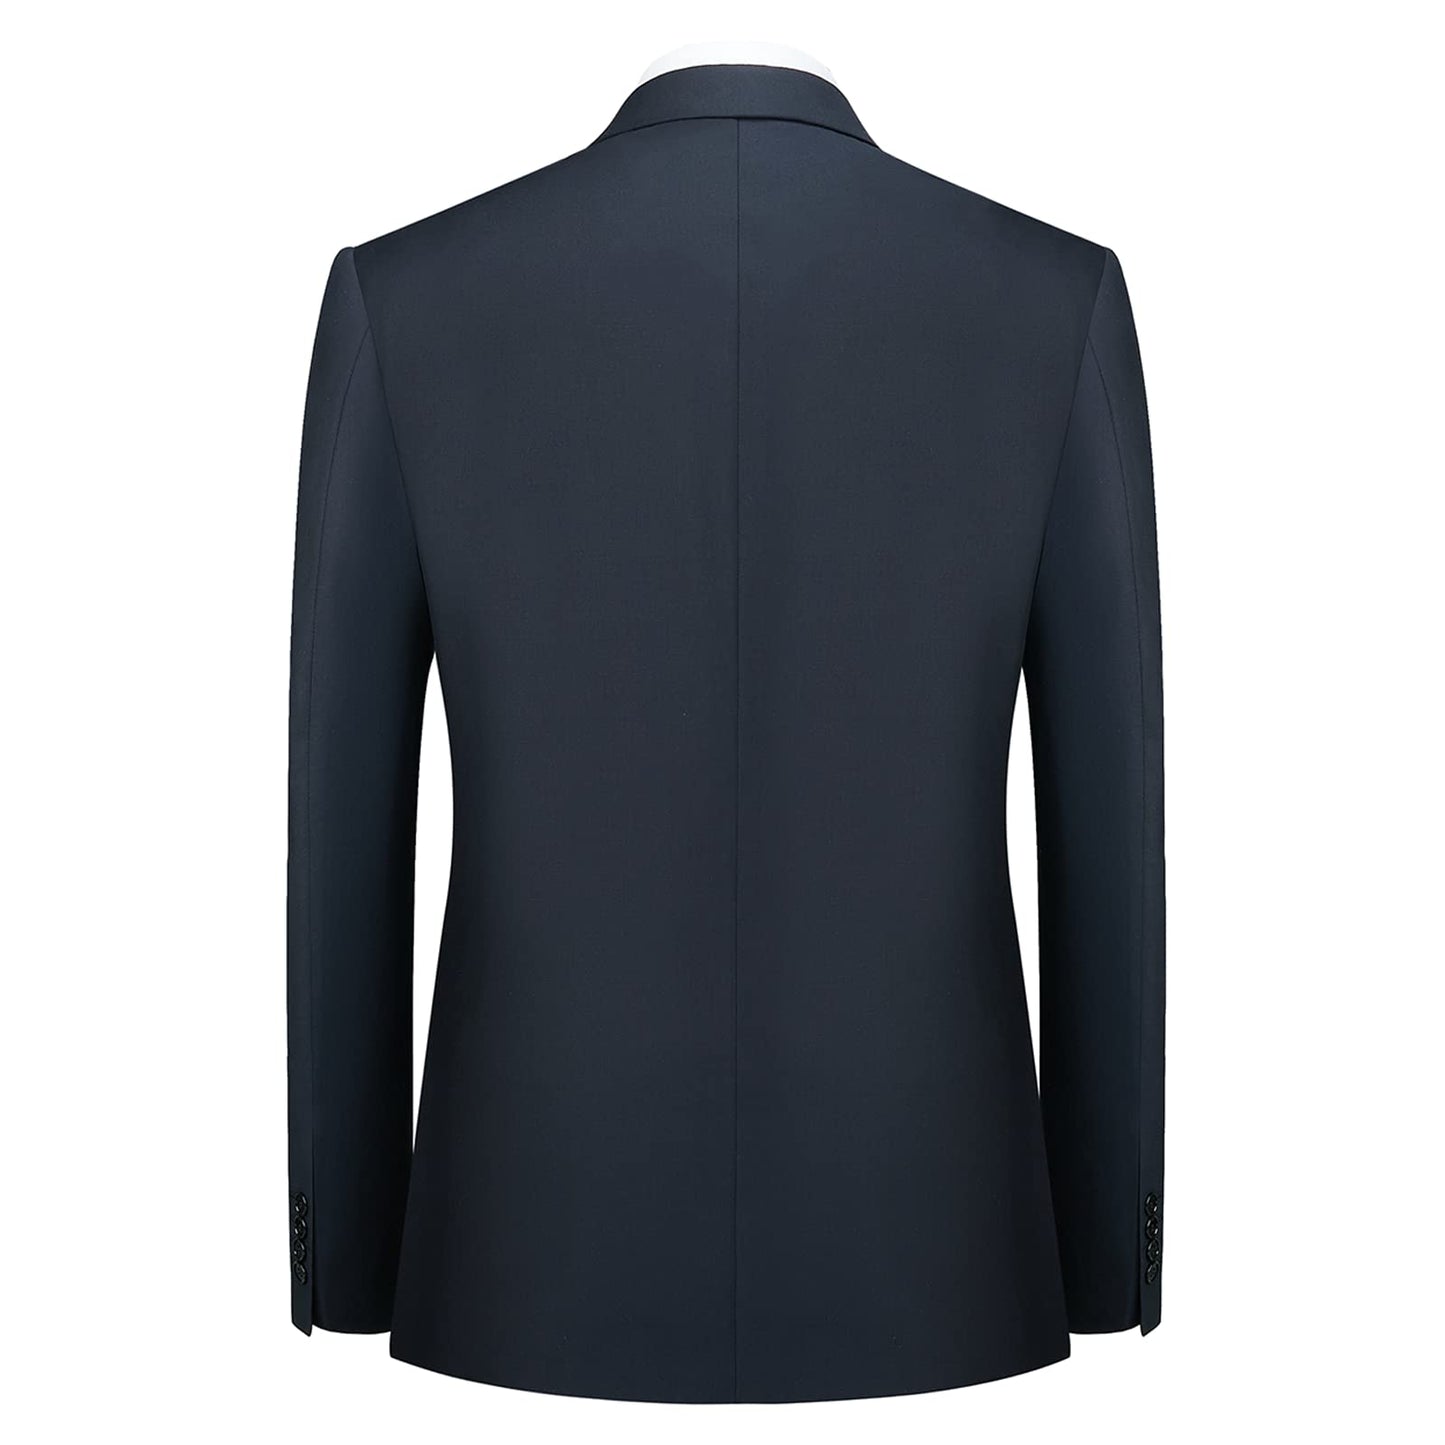 Cooper & Nelson Men's Suit Slim Fit, 3 Piece Suits for Men, One Button Solid Jacket Vest Pants with Tie, Tuxedo Set Dark Navy XS